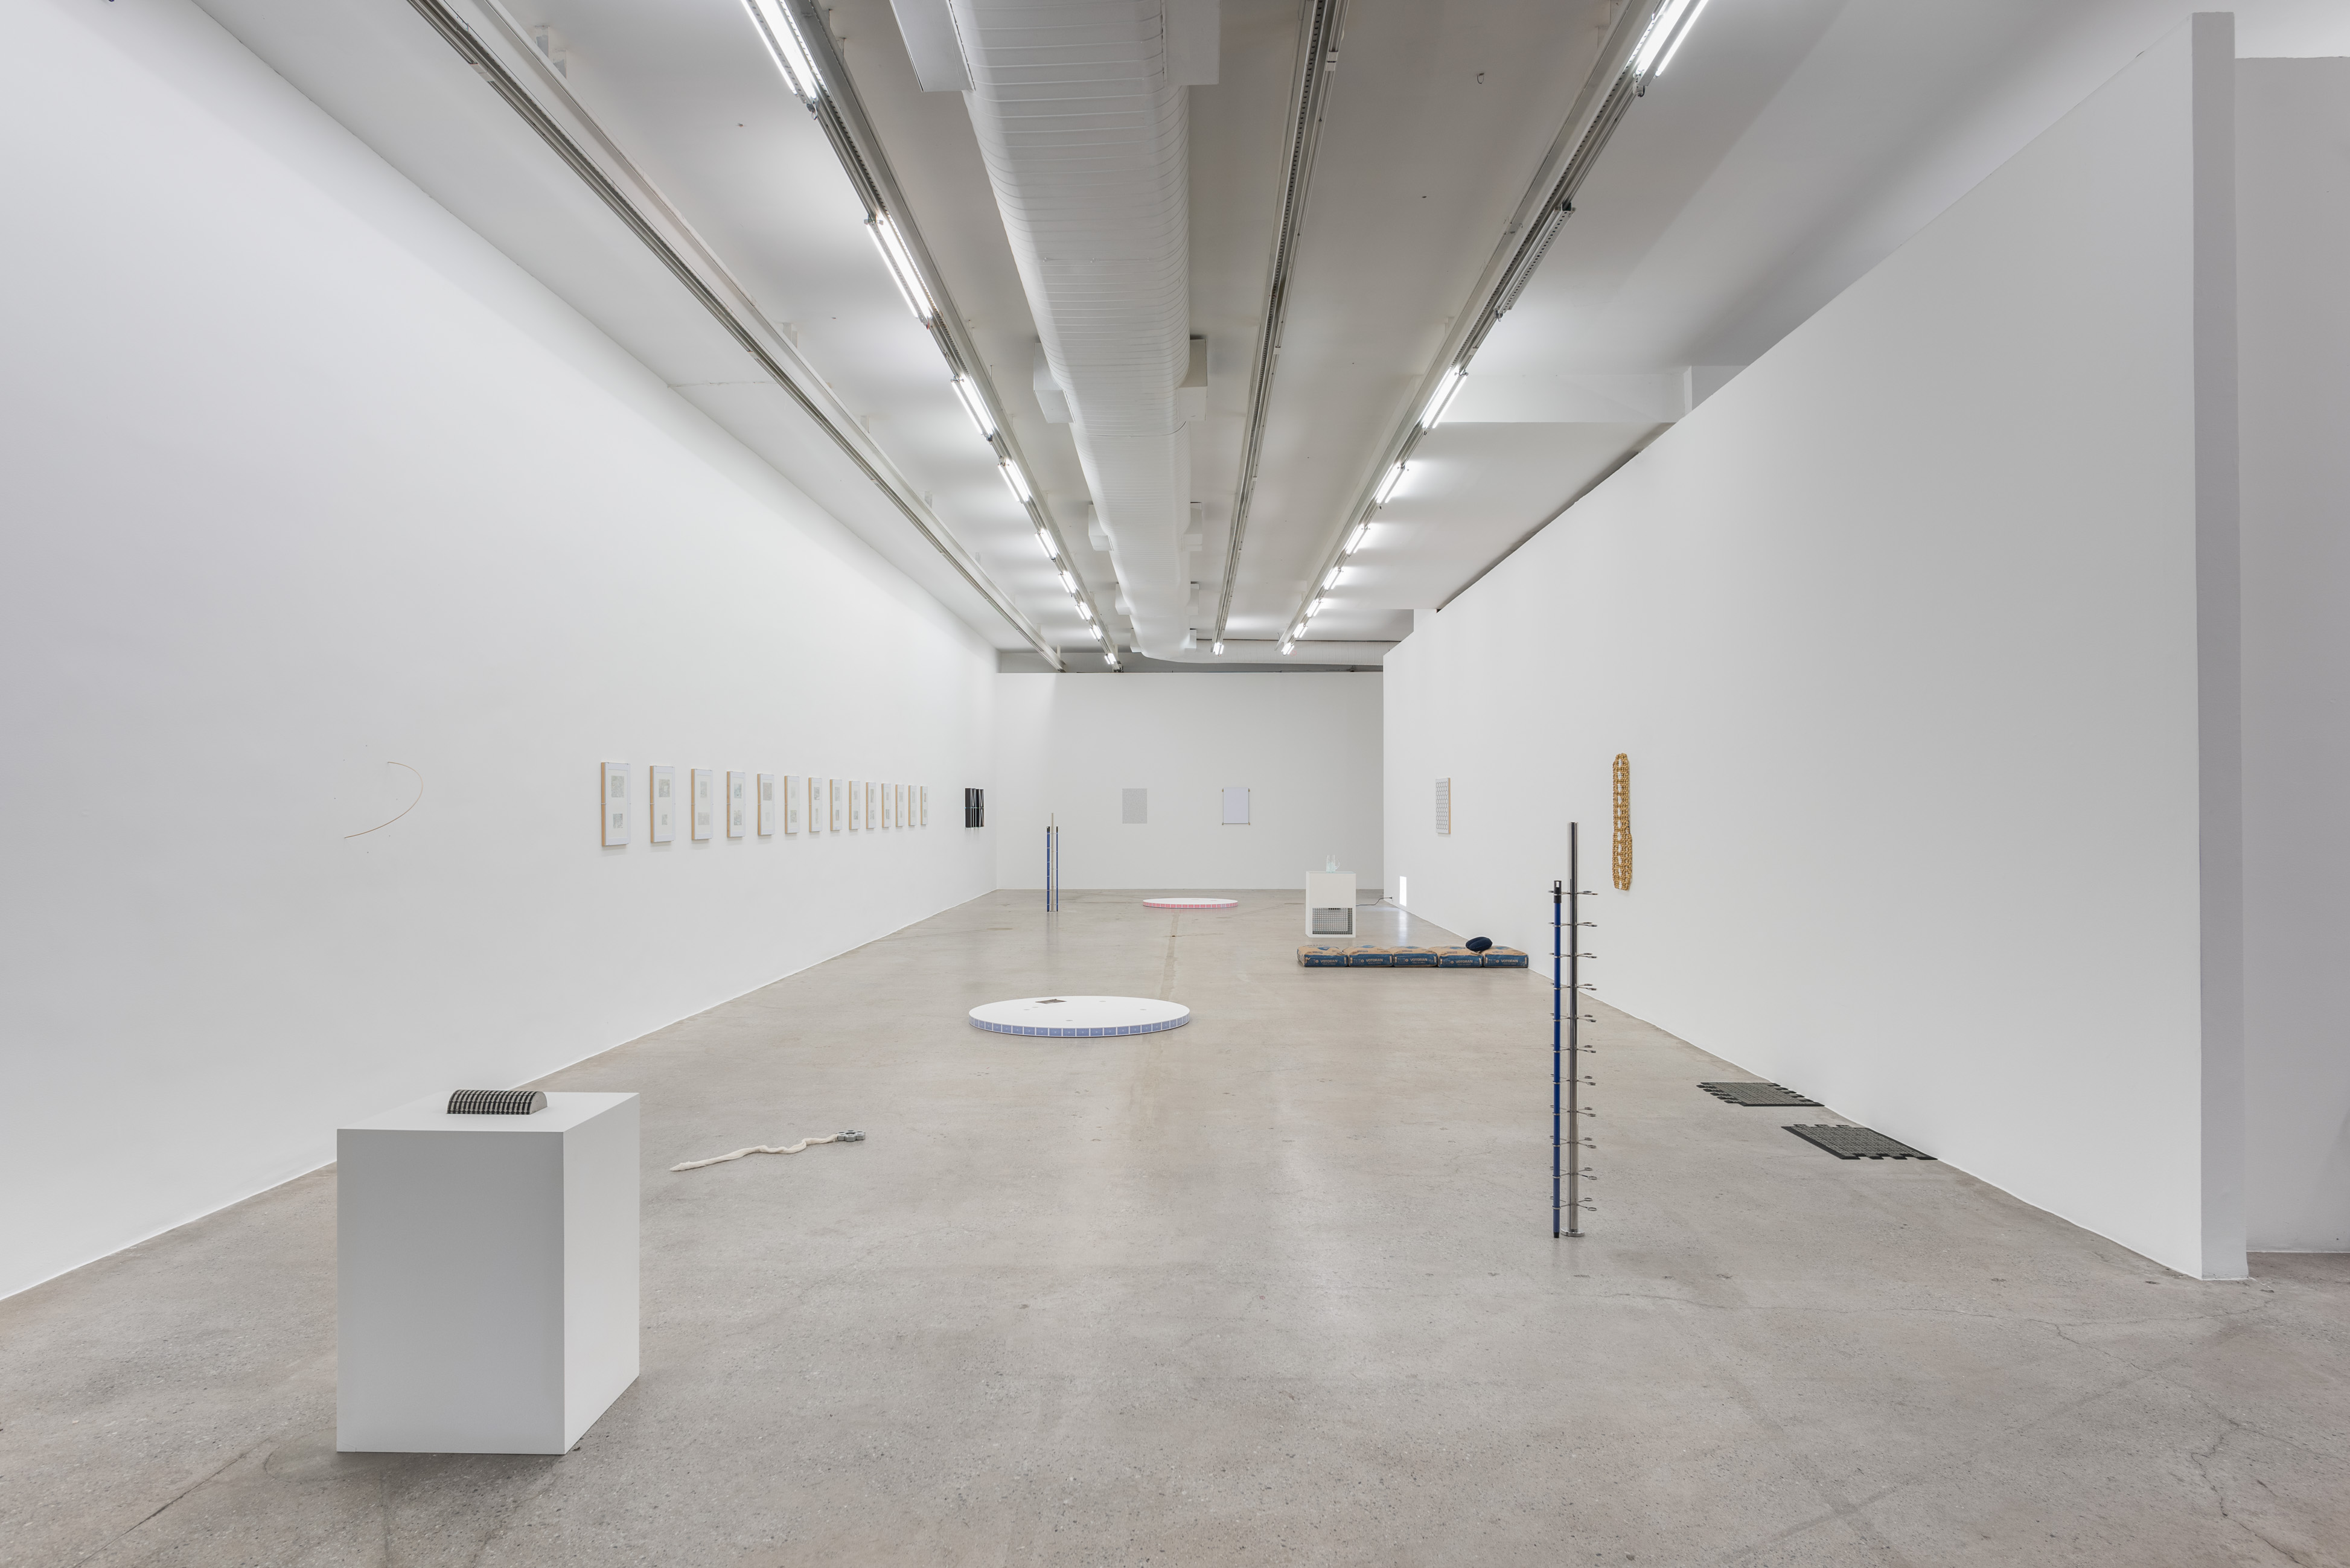 Exhibition view at Galeria Luisa Strina, 2016